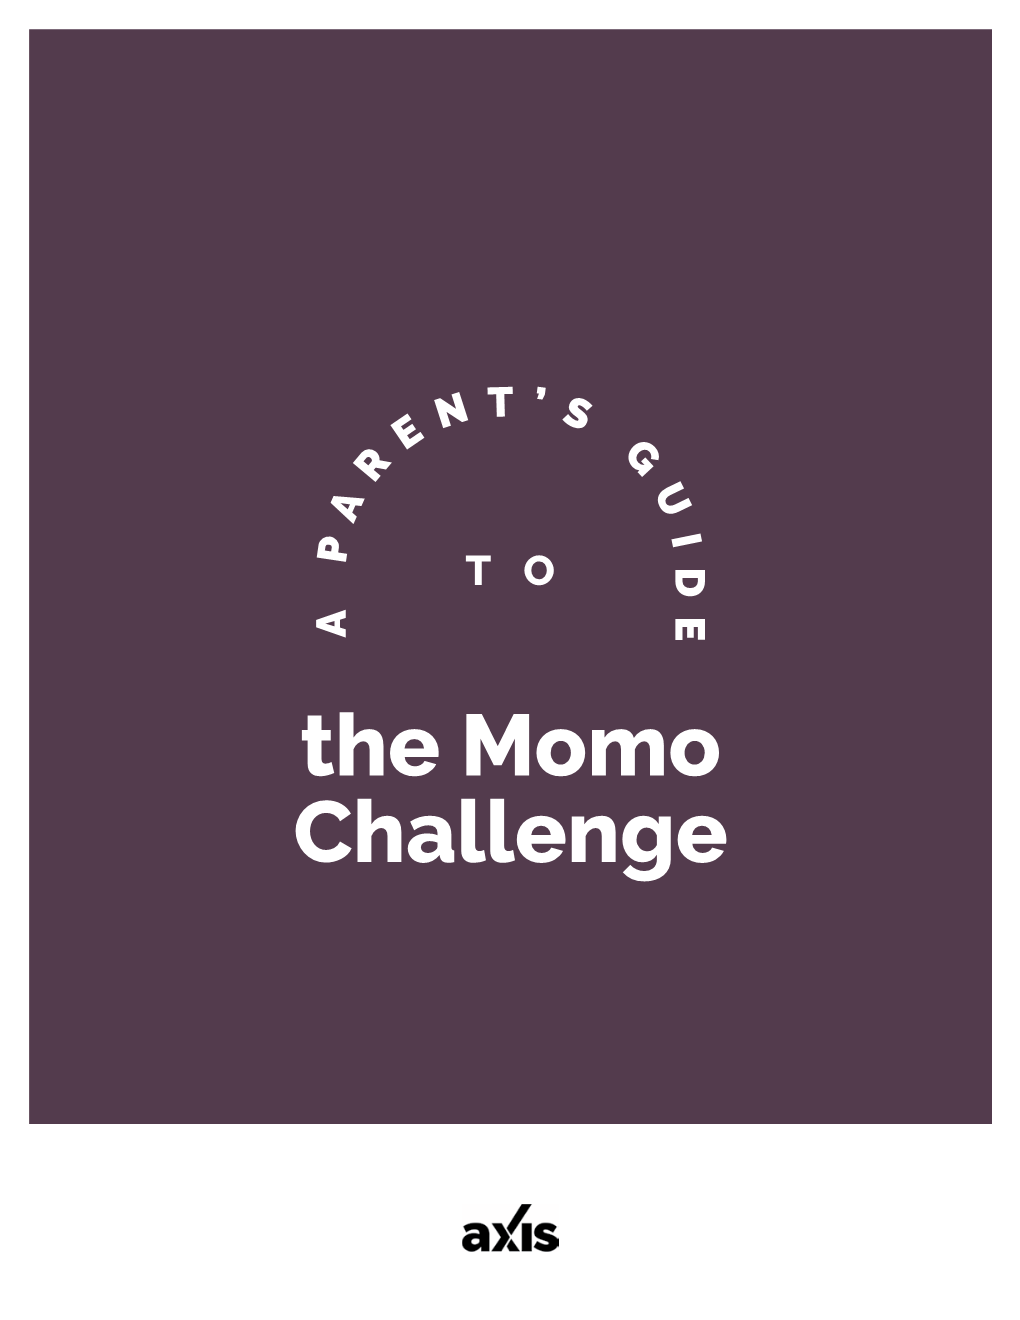 The Momo Challenge